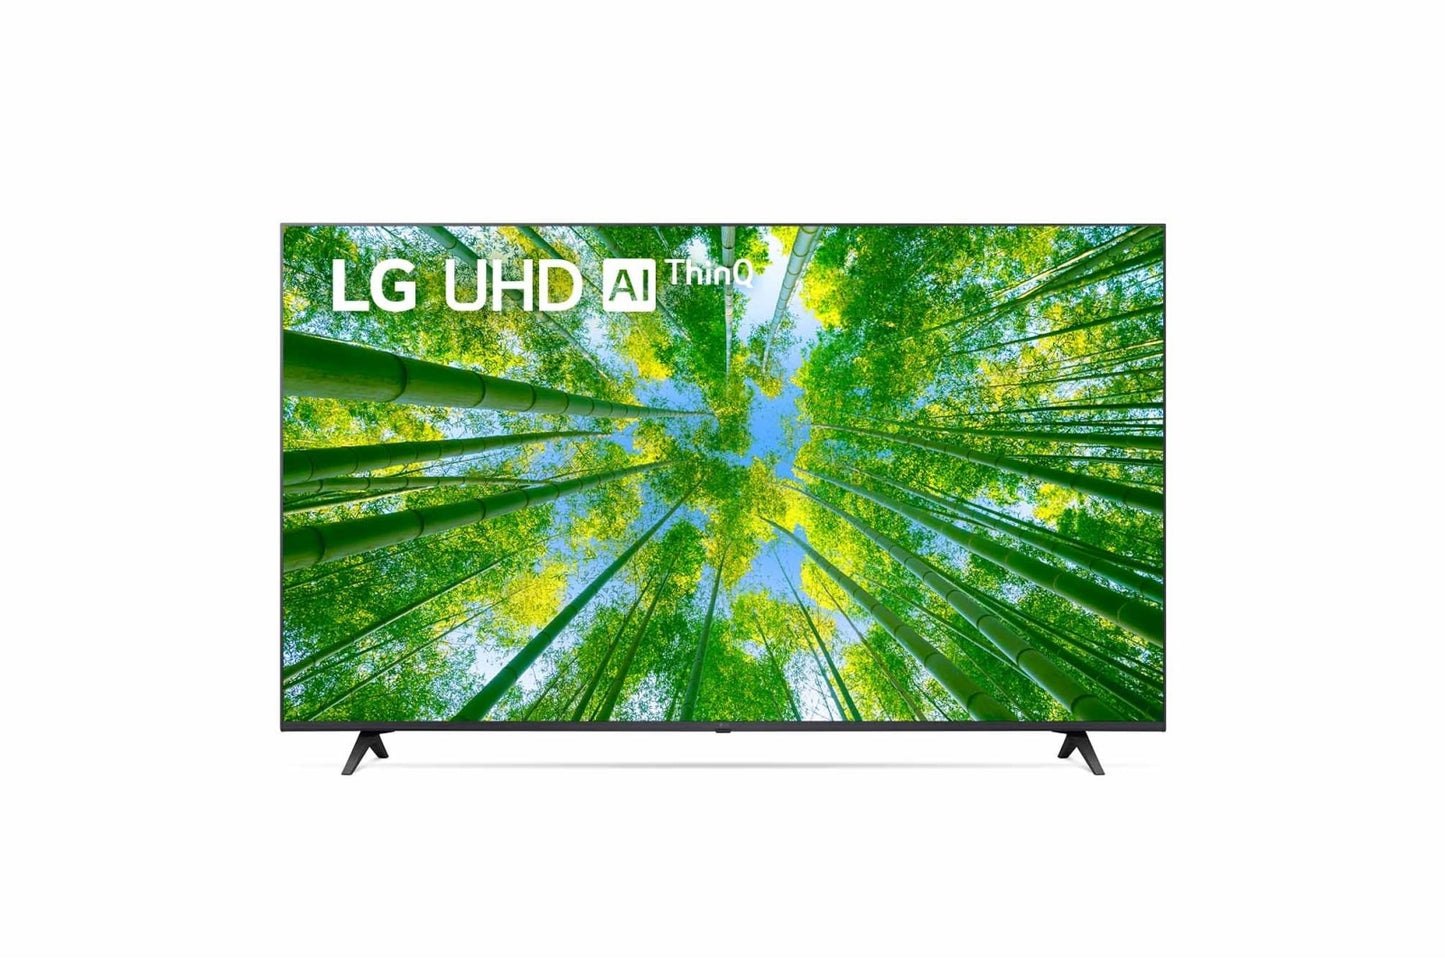 LG LG UHD 65IN UQ8000 SMART TV MNTR CON THINQ AI INTELIG. ARTIF